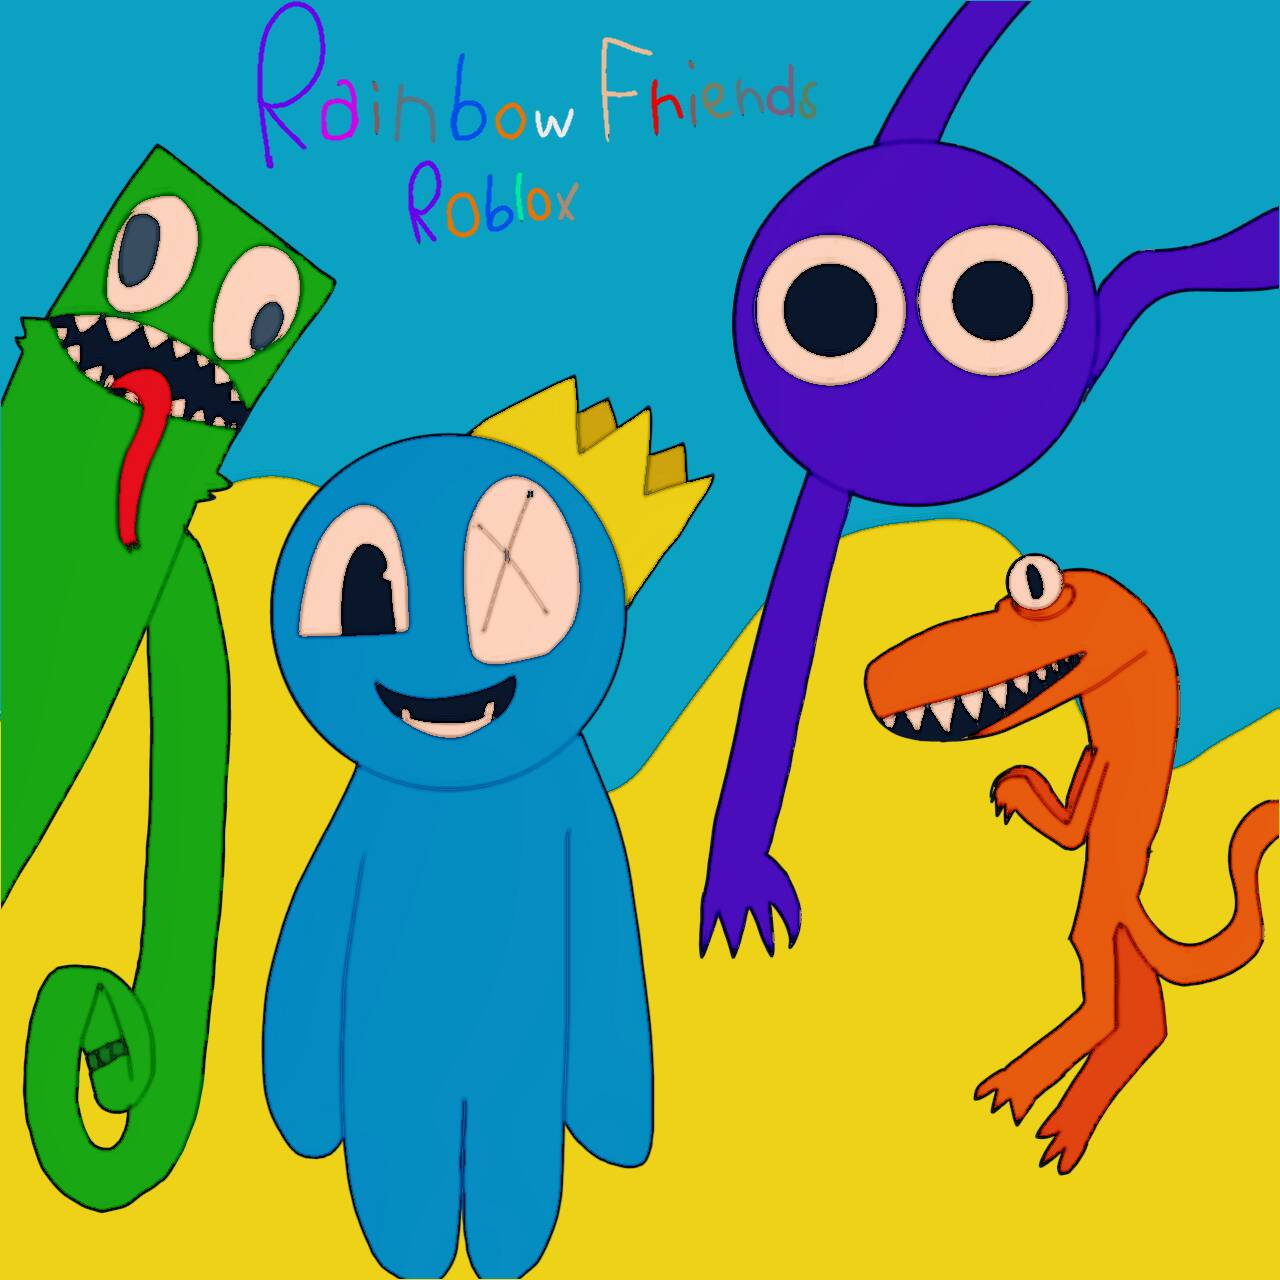 Rainbow friends roblox by Hola12345XD on DeviantArt